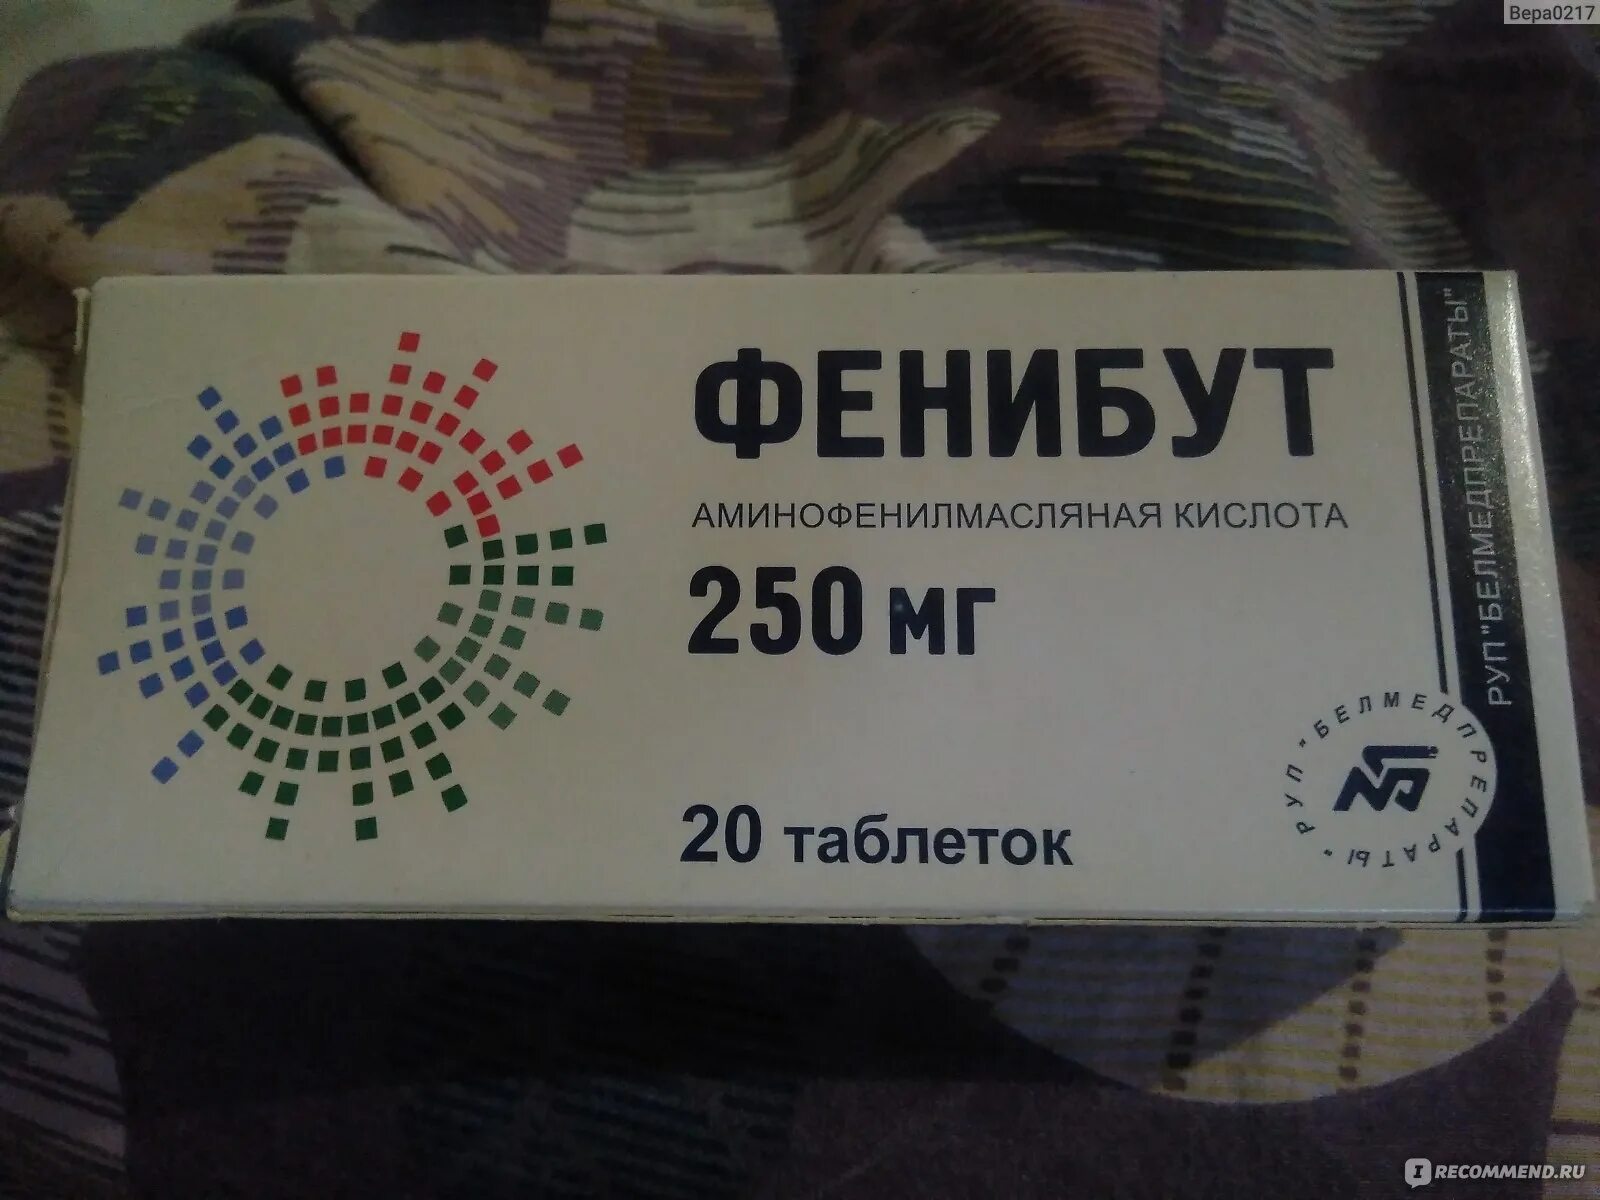 Фенибут 250 мг Прибалтика. Фенибут 250 мг латвийский. Фенибут 250 производитель Латвия. Фенибут 250 Прибалтика.